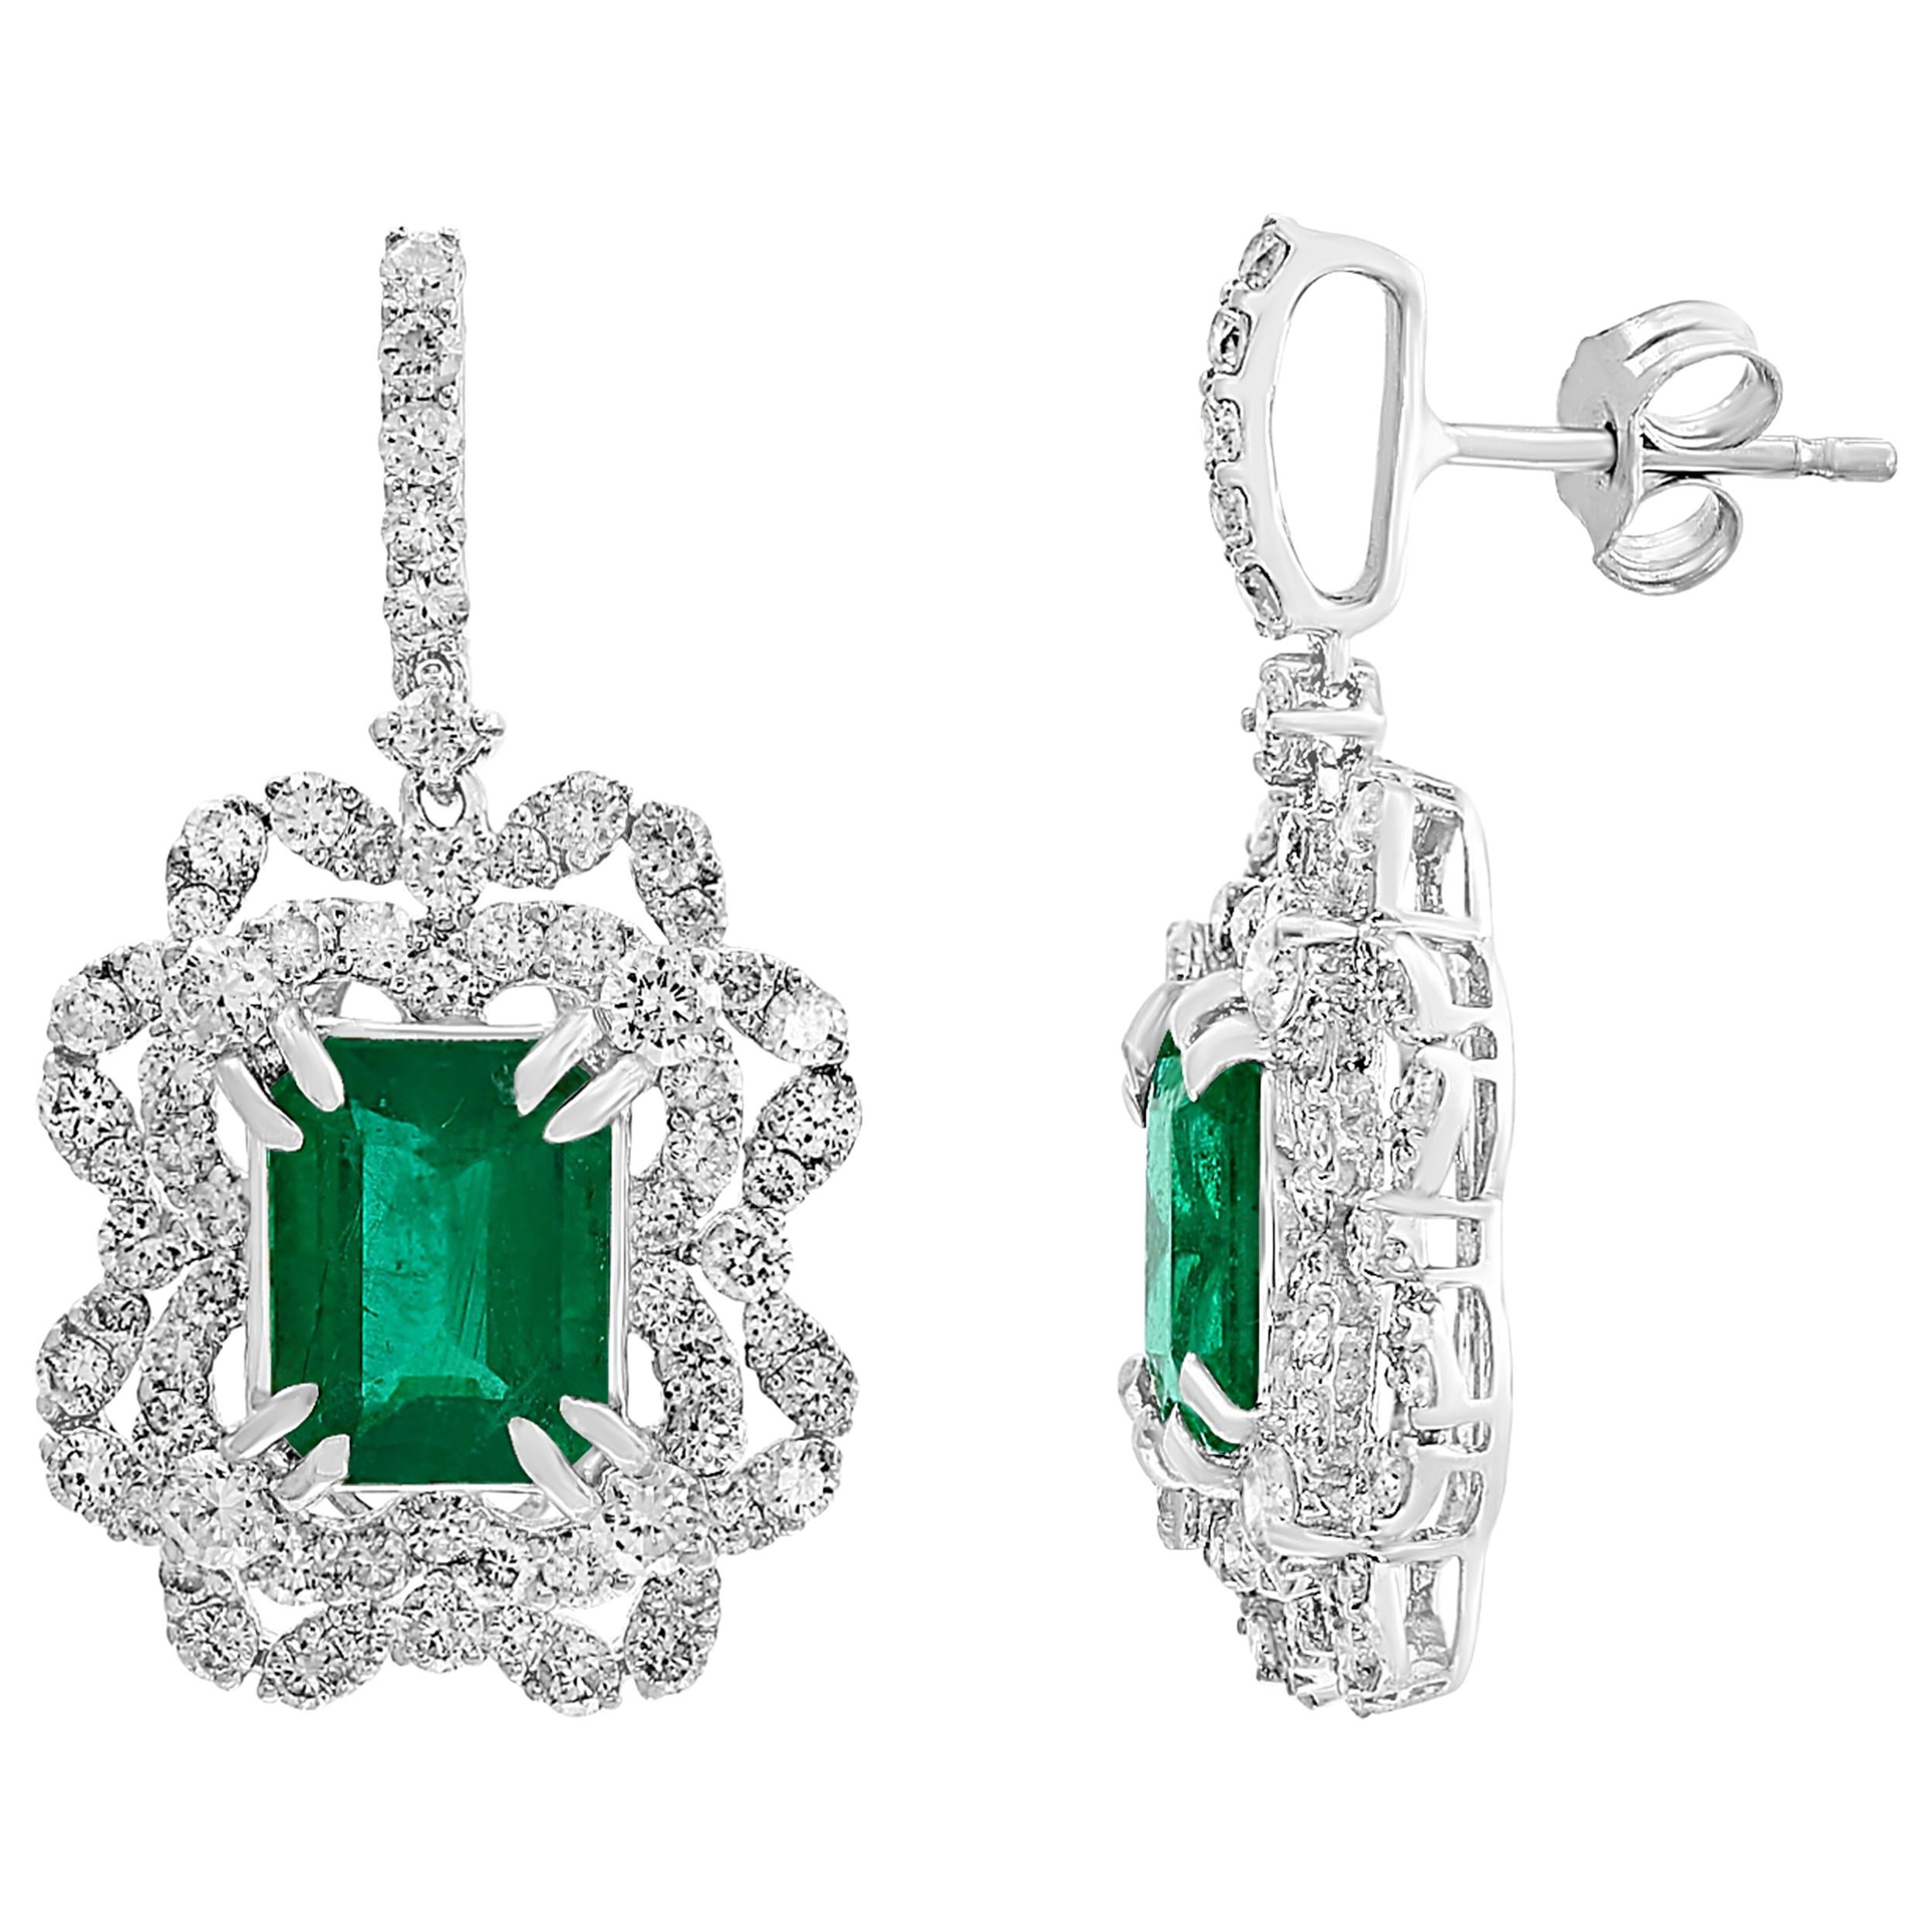 7 Carat Colombian Emerald Cut Emerald Diamond Hanging/Drop Earrings 18Karat Gold